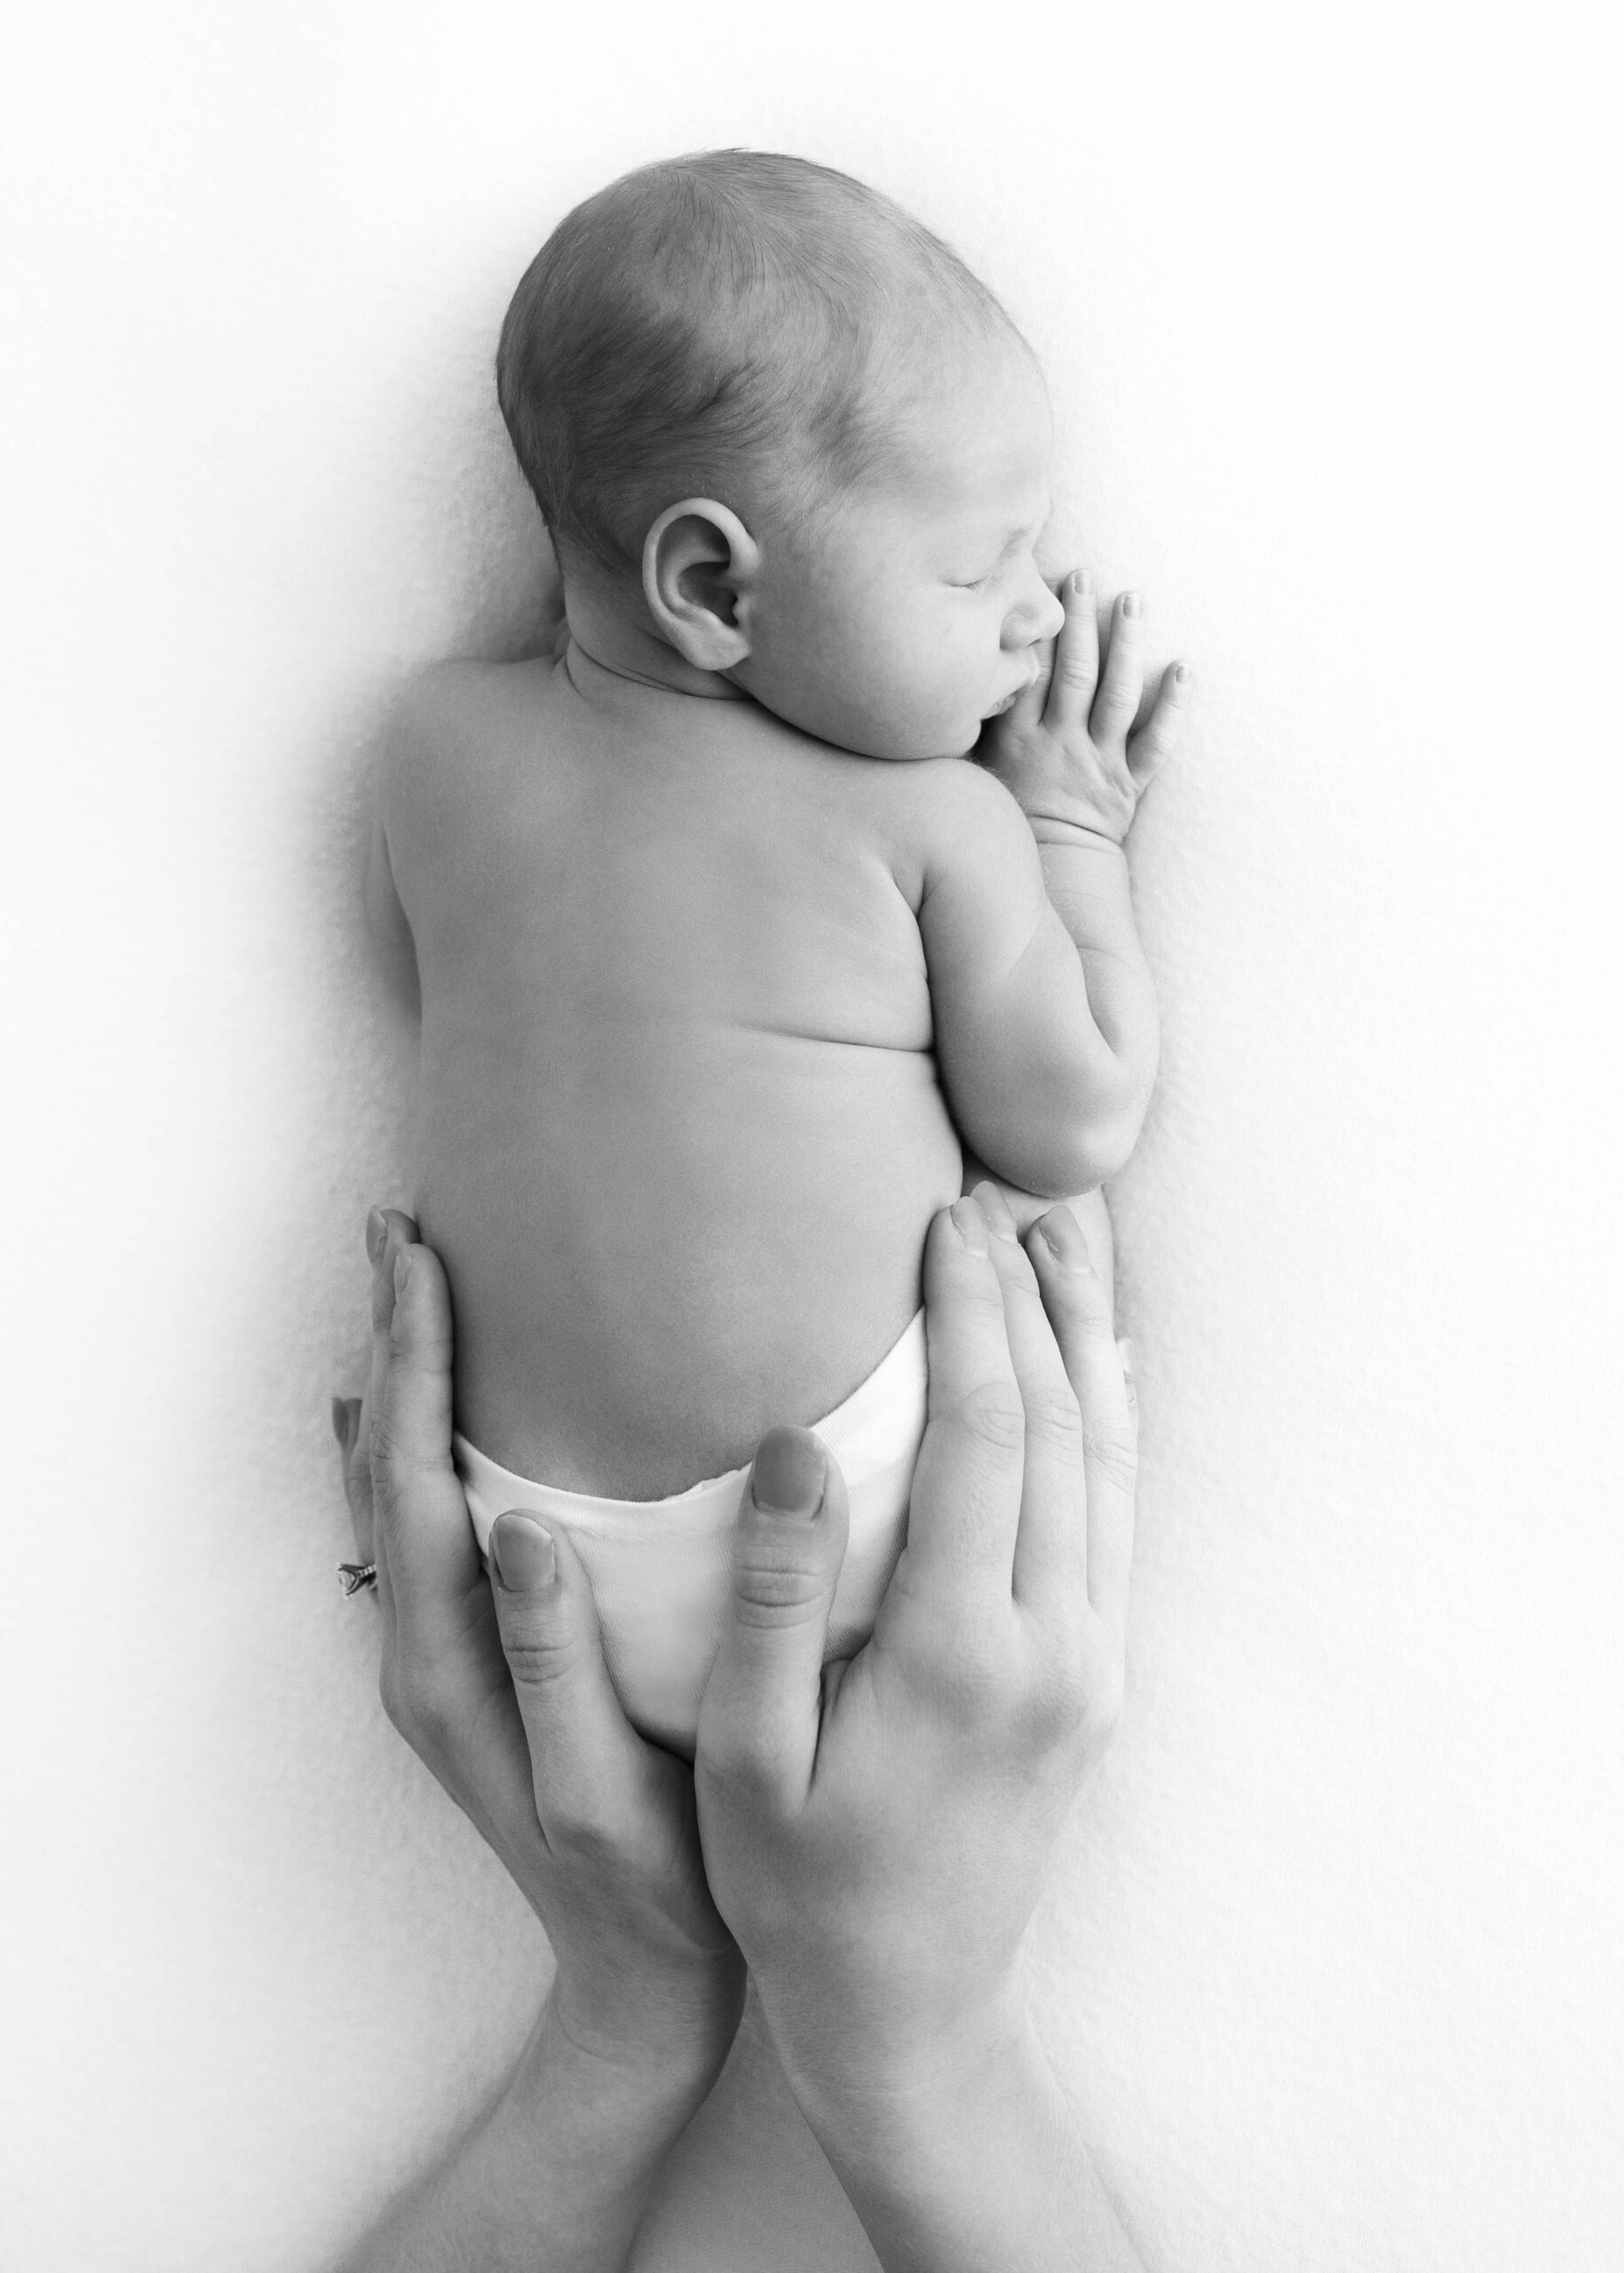 mom's hands around newborn's bottom as he sleeps on his belly by DFW newborn photographer